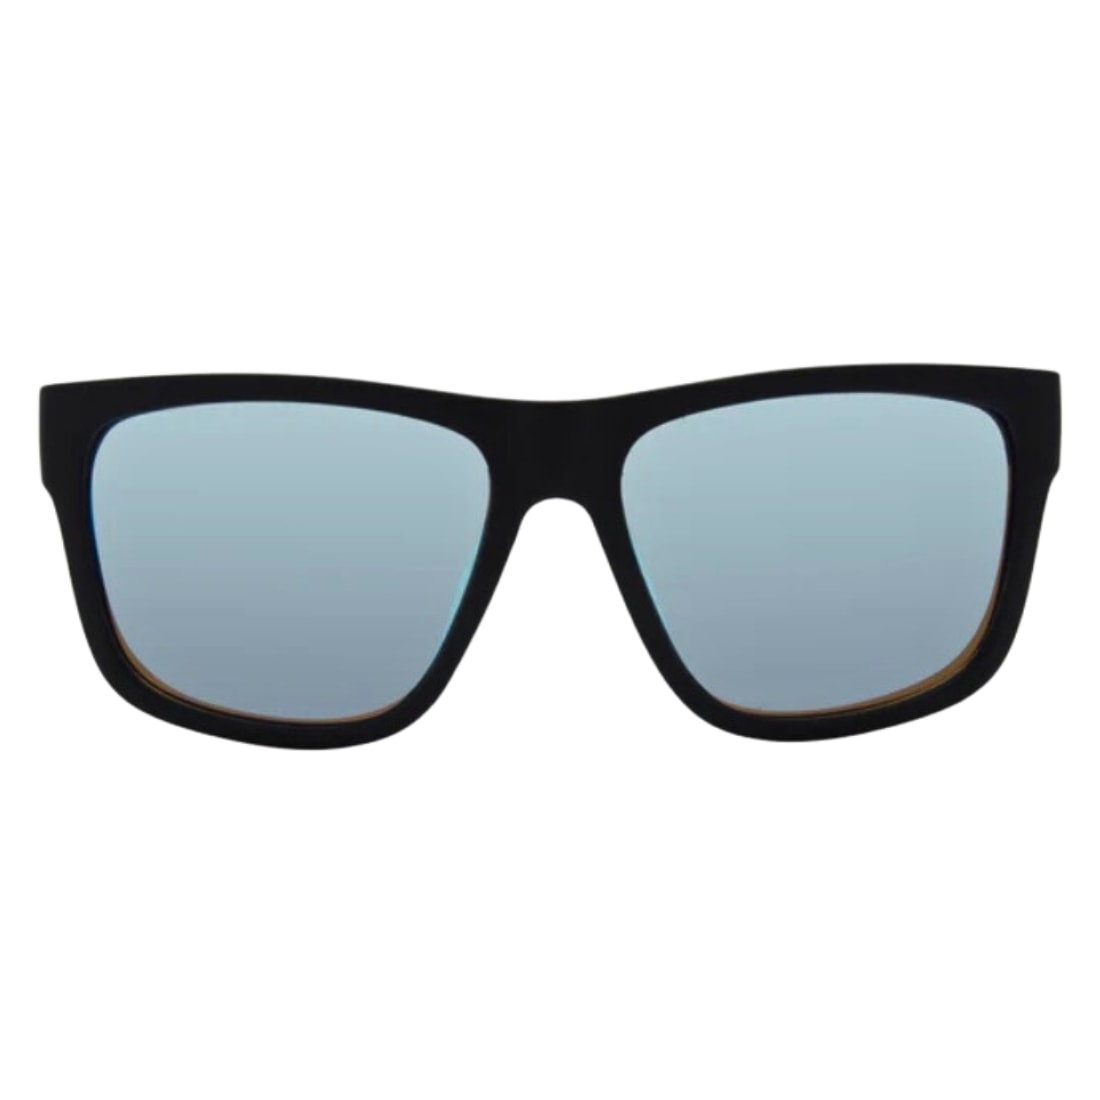 I-Sea Shipwrecks Polarised Sunglasses - Black/Silver Blue Mirror Polarized - Square/Rectangular Sunglasses by I-Sea